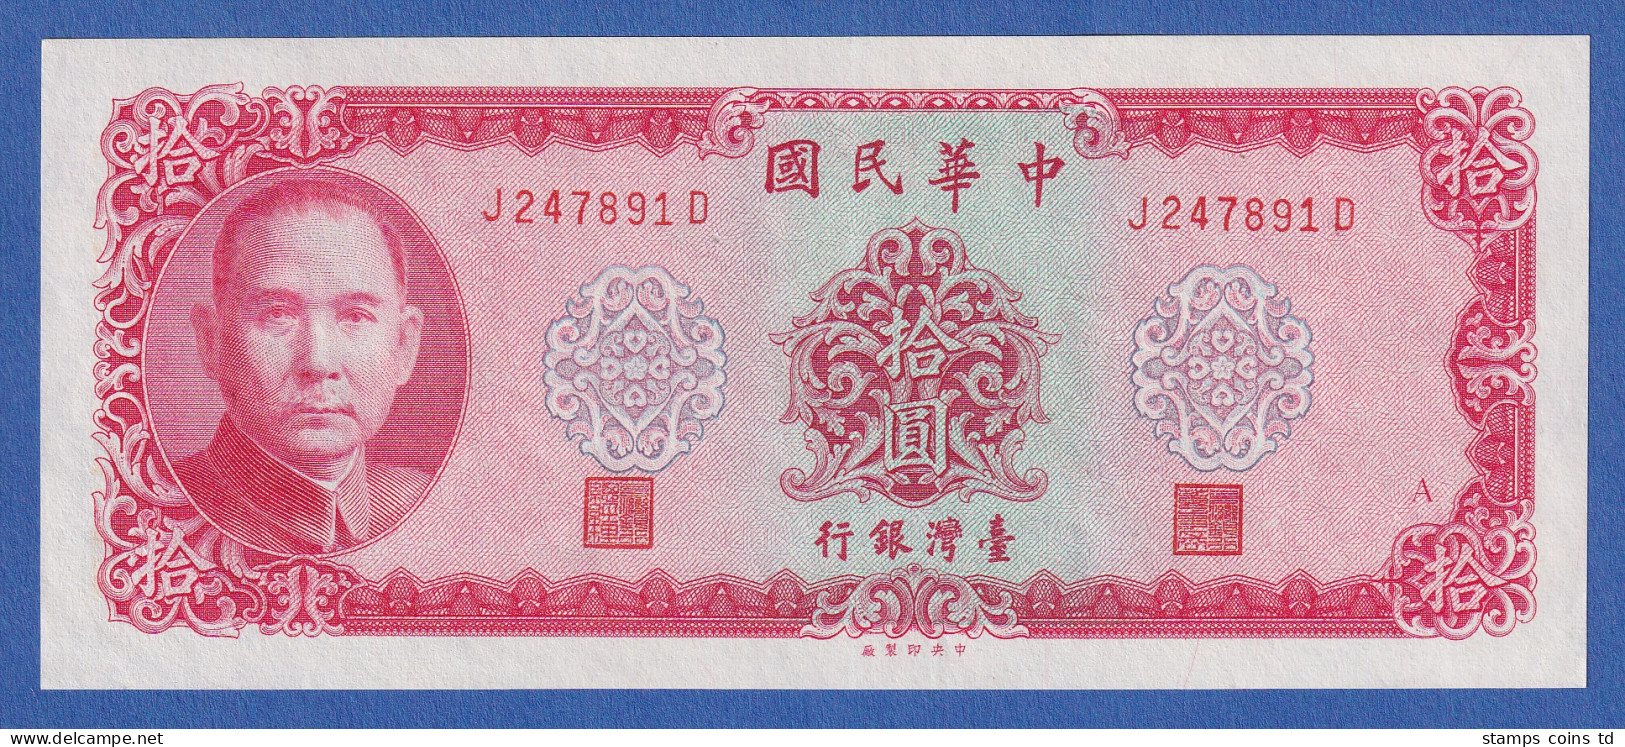 China Taiwan 1969 Banknote 10 Yuan Bankfrisch, Unzirkuliert. - Chine